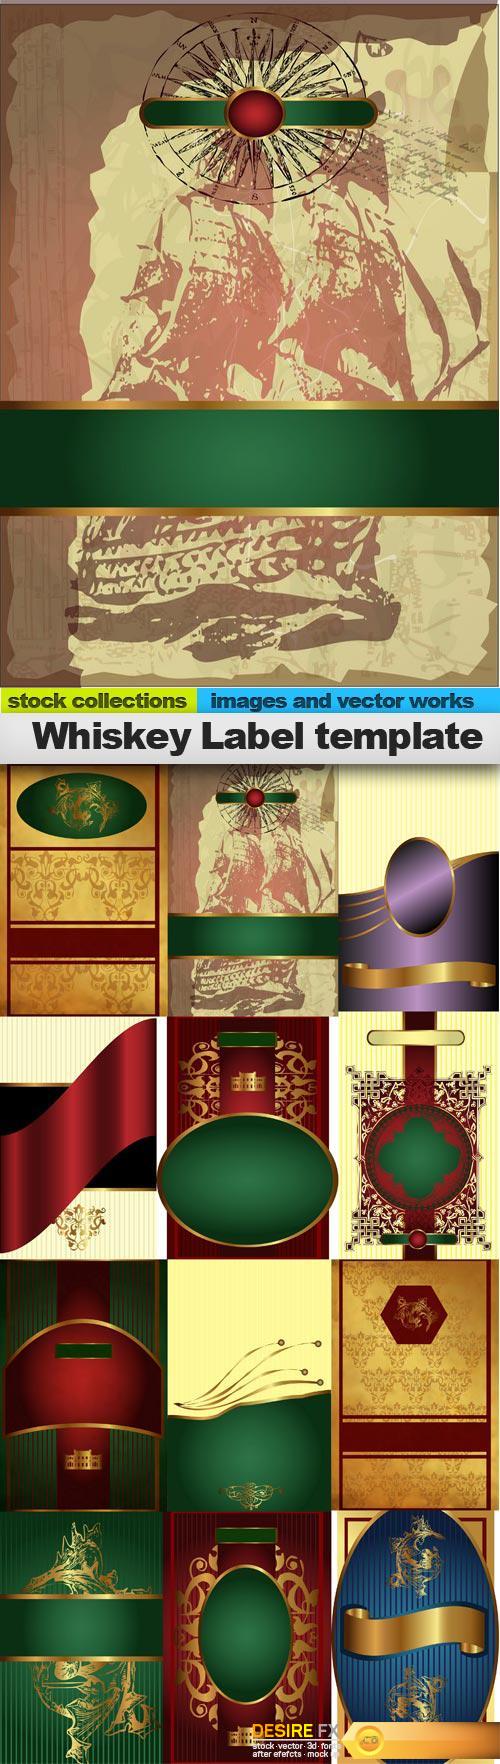 Whiskey Label template, 12 x UHQ JPEG